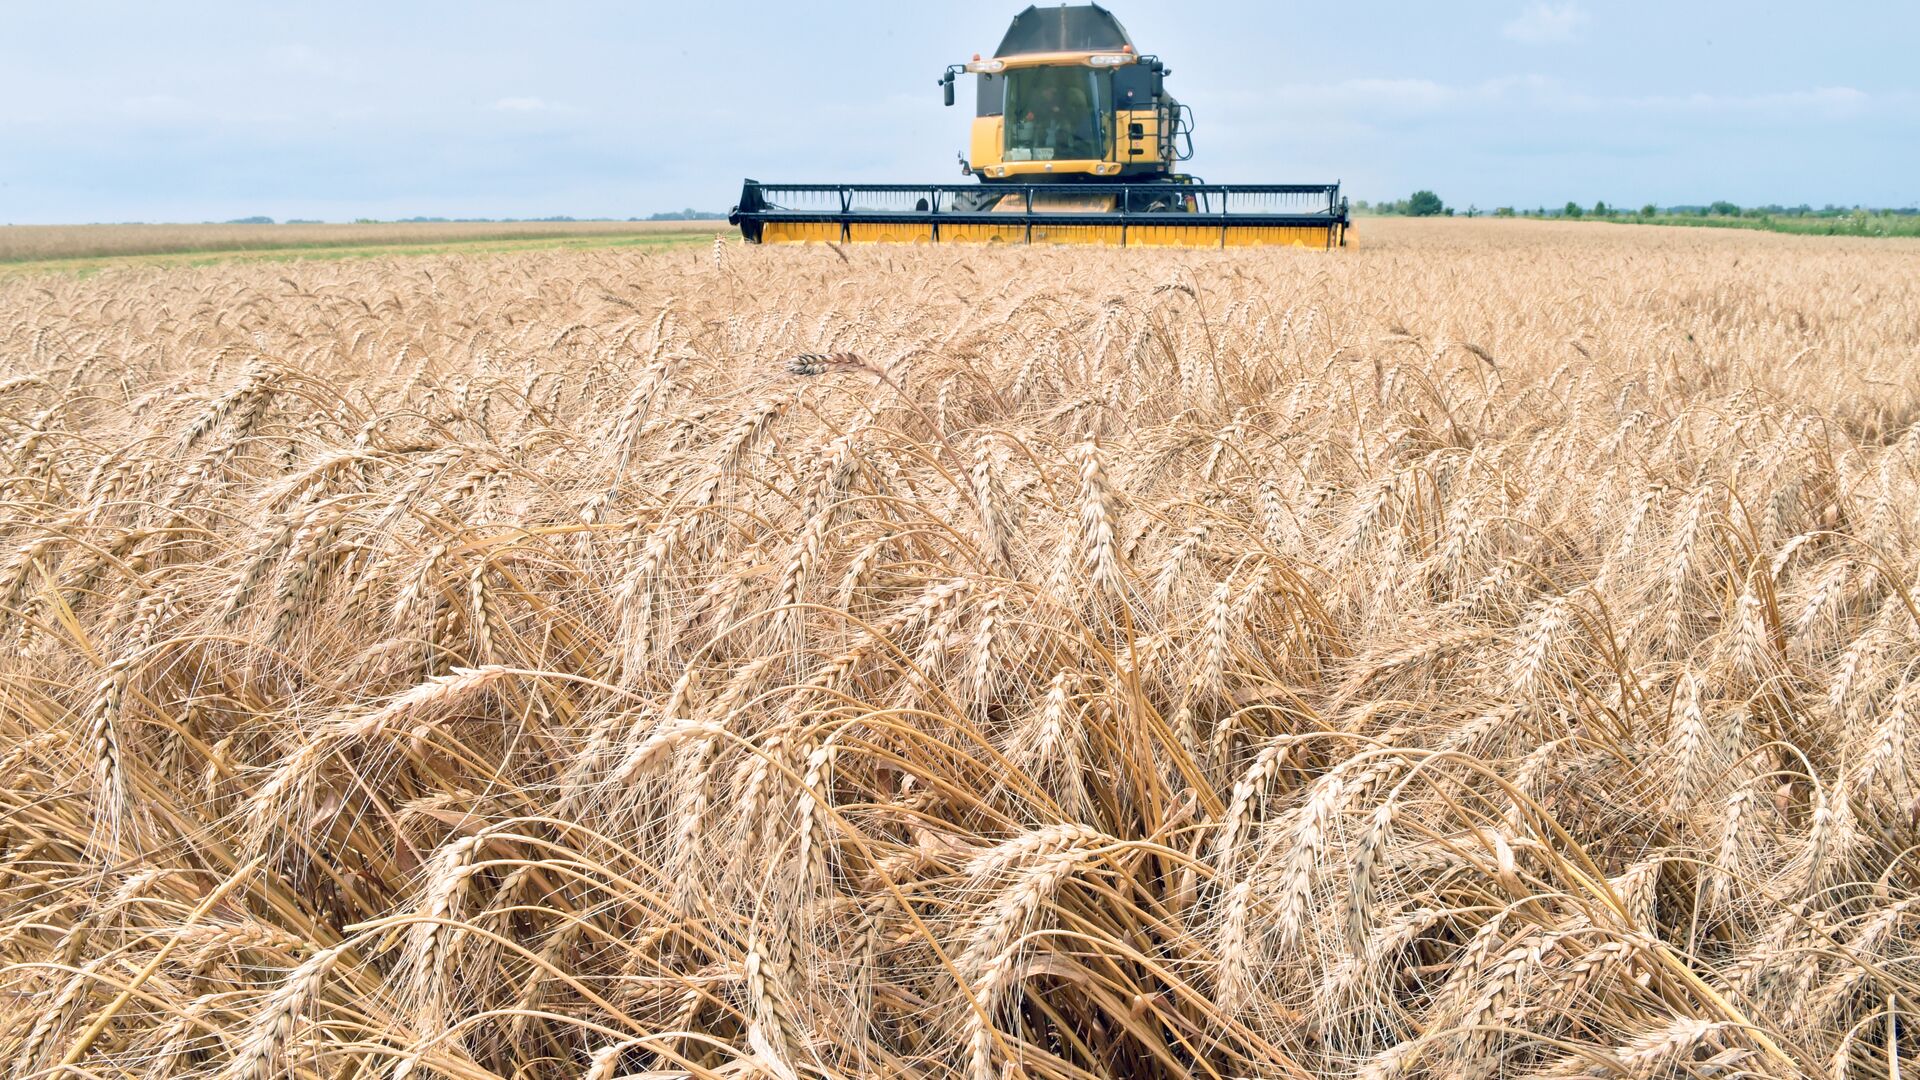 A combine harvester gathers grain from a field in Ukraine (file). - Sputnik International, 1920, 19.07.2022